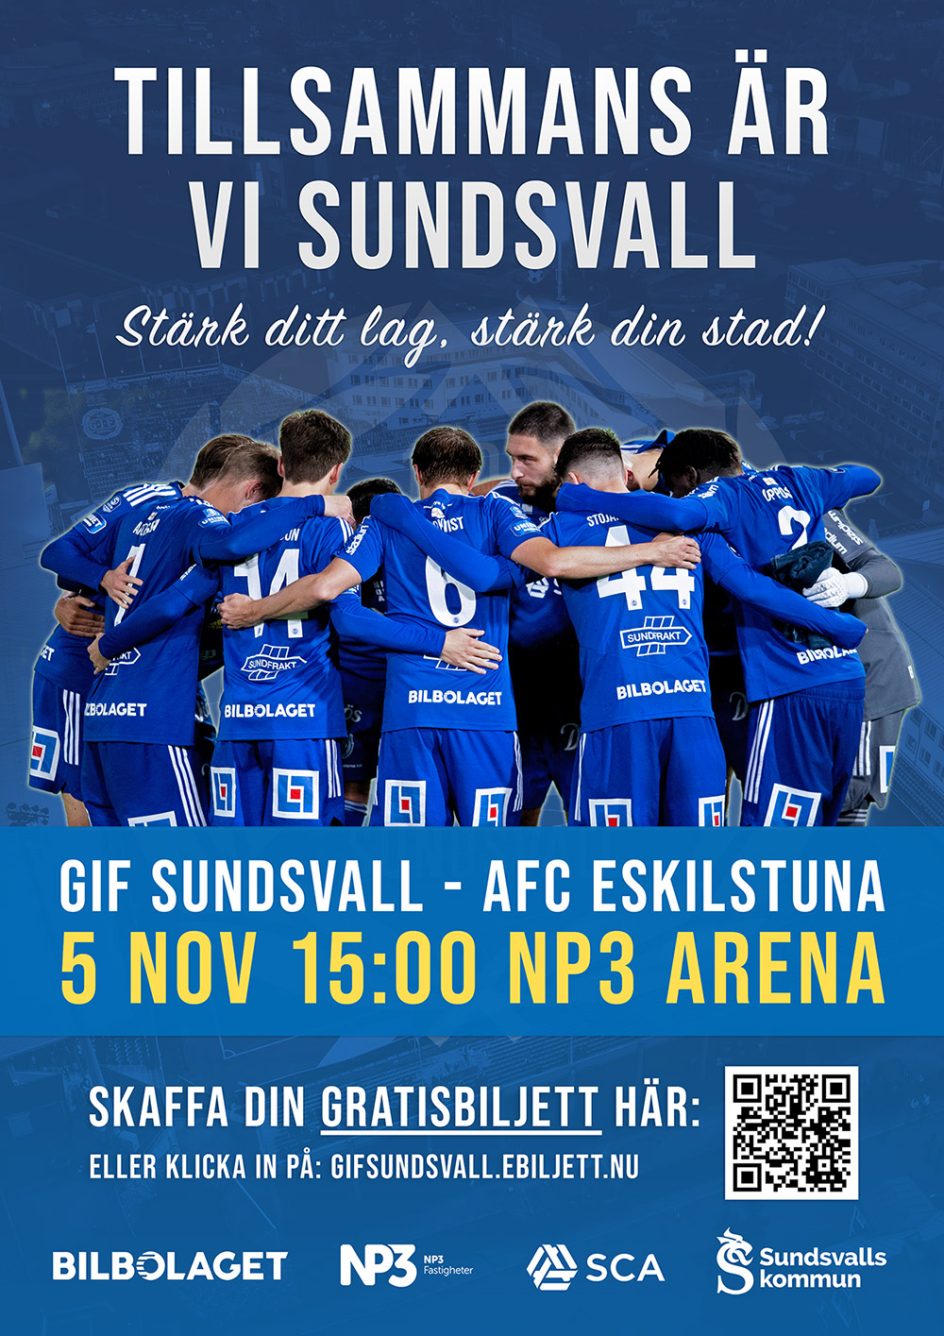 Skriv ut affisch inför AFC Eskilstuna-matchen!